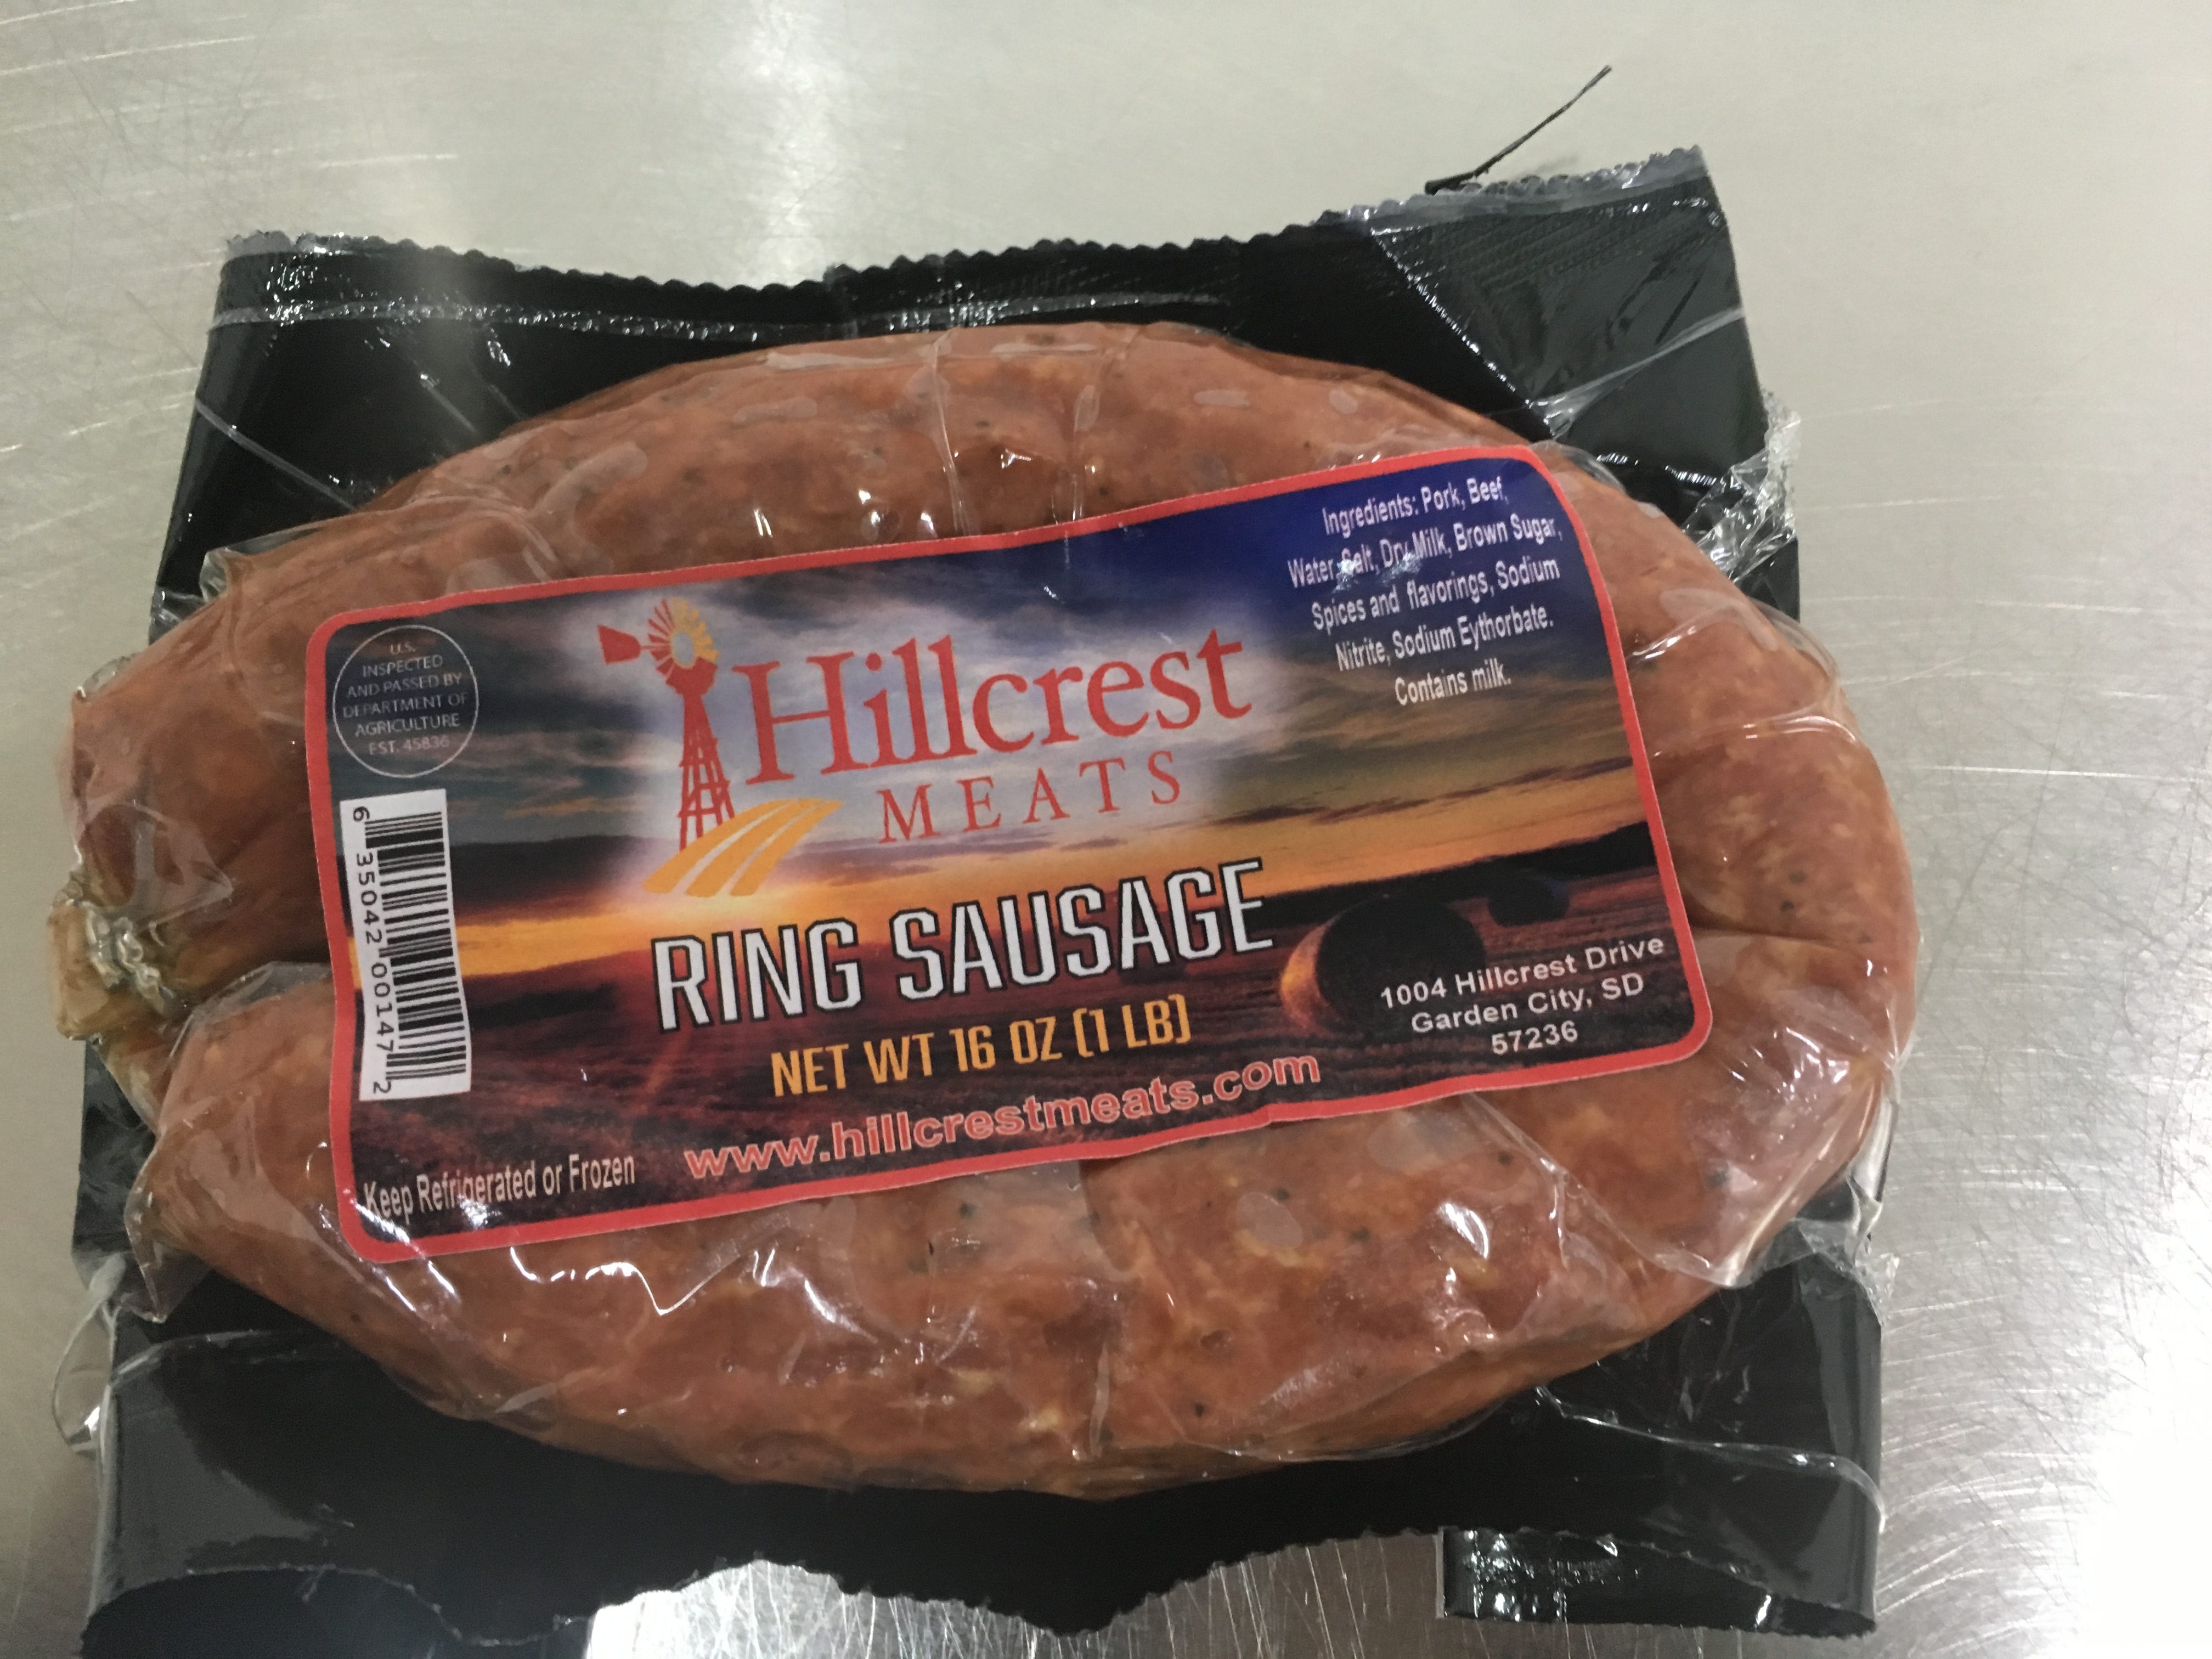 Ring Bologna - Smoked Sausage - LeRoy Meats